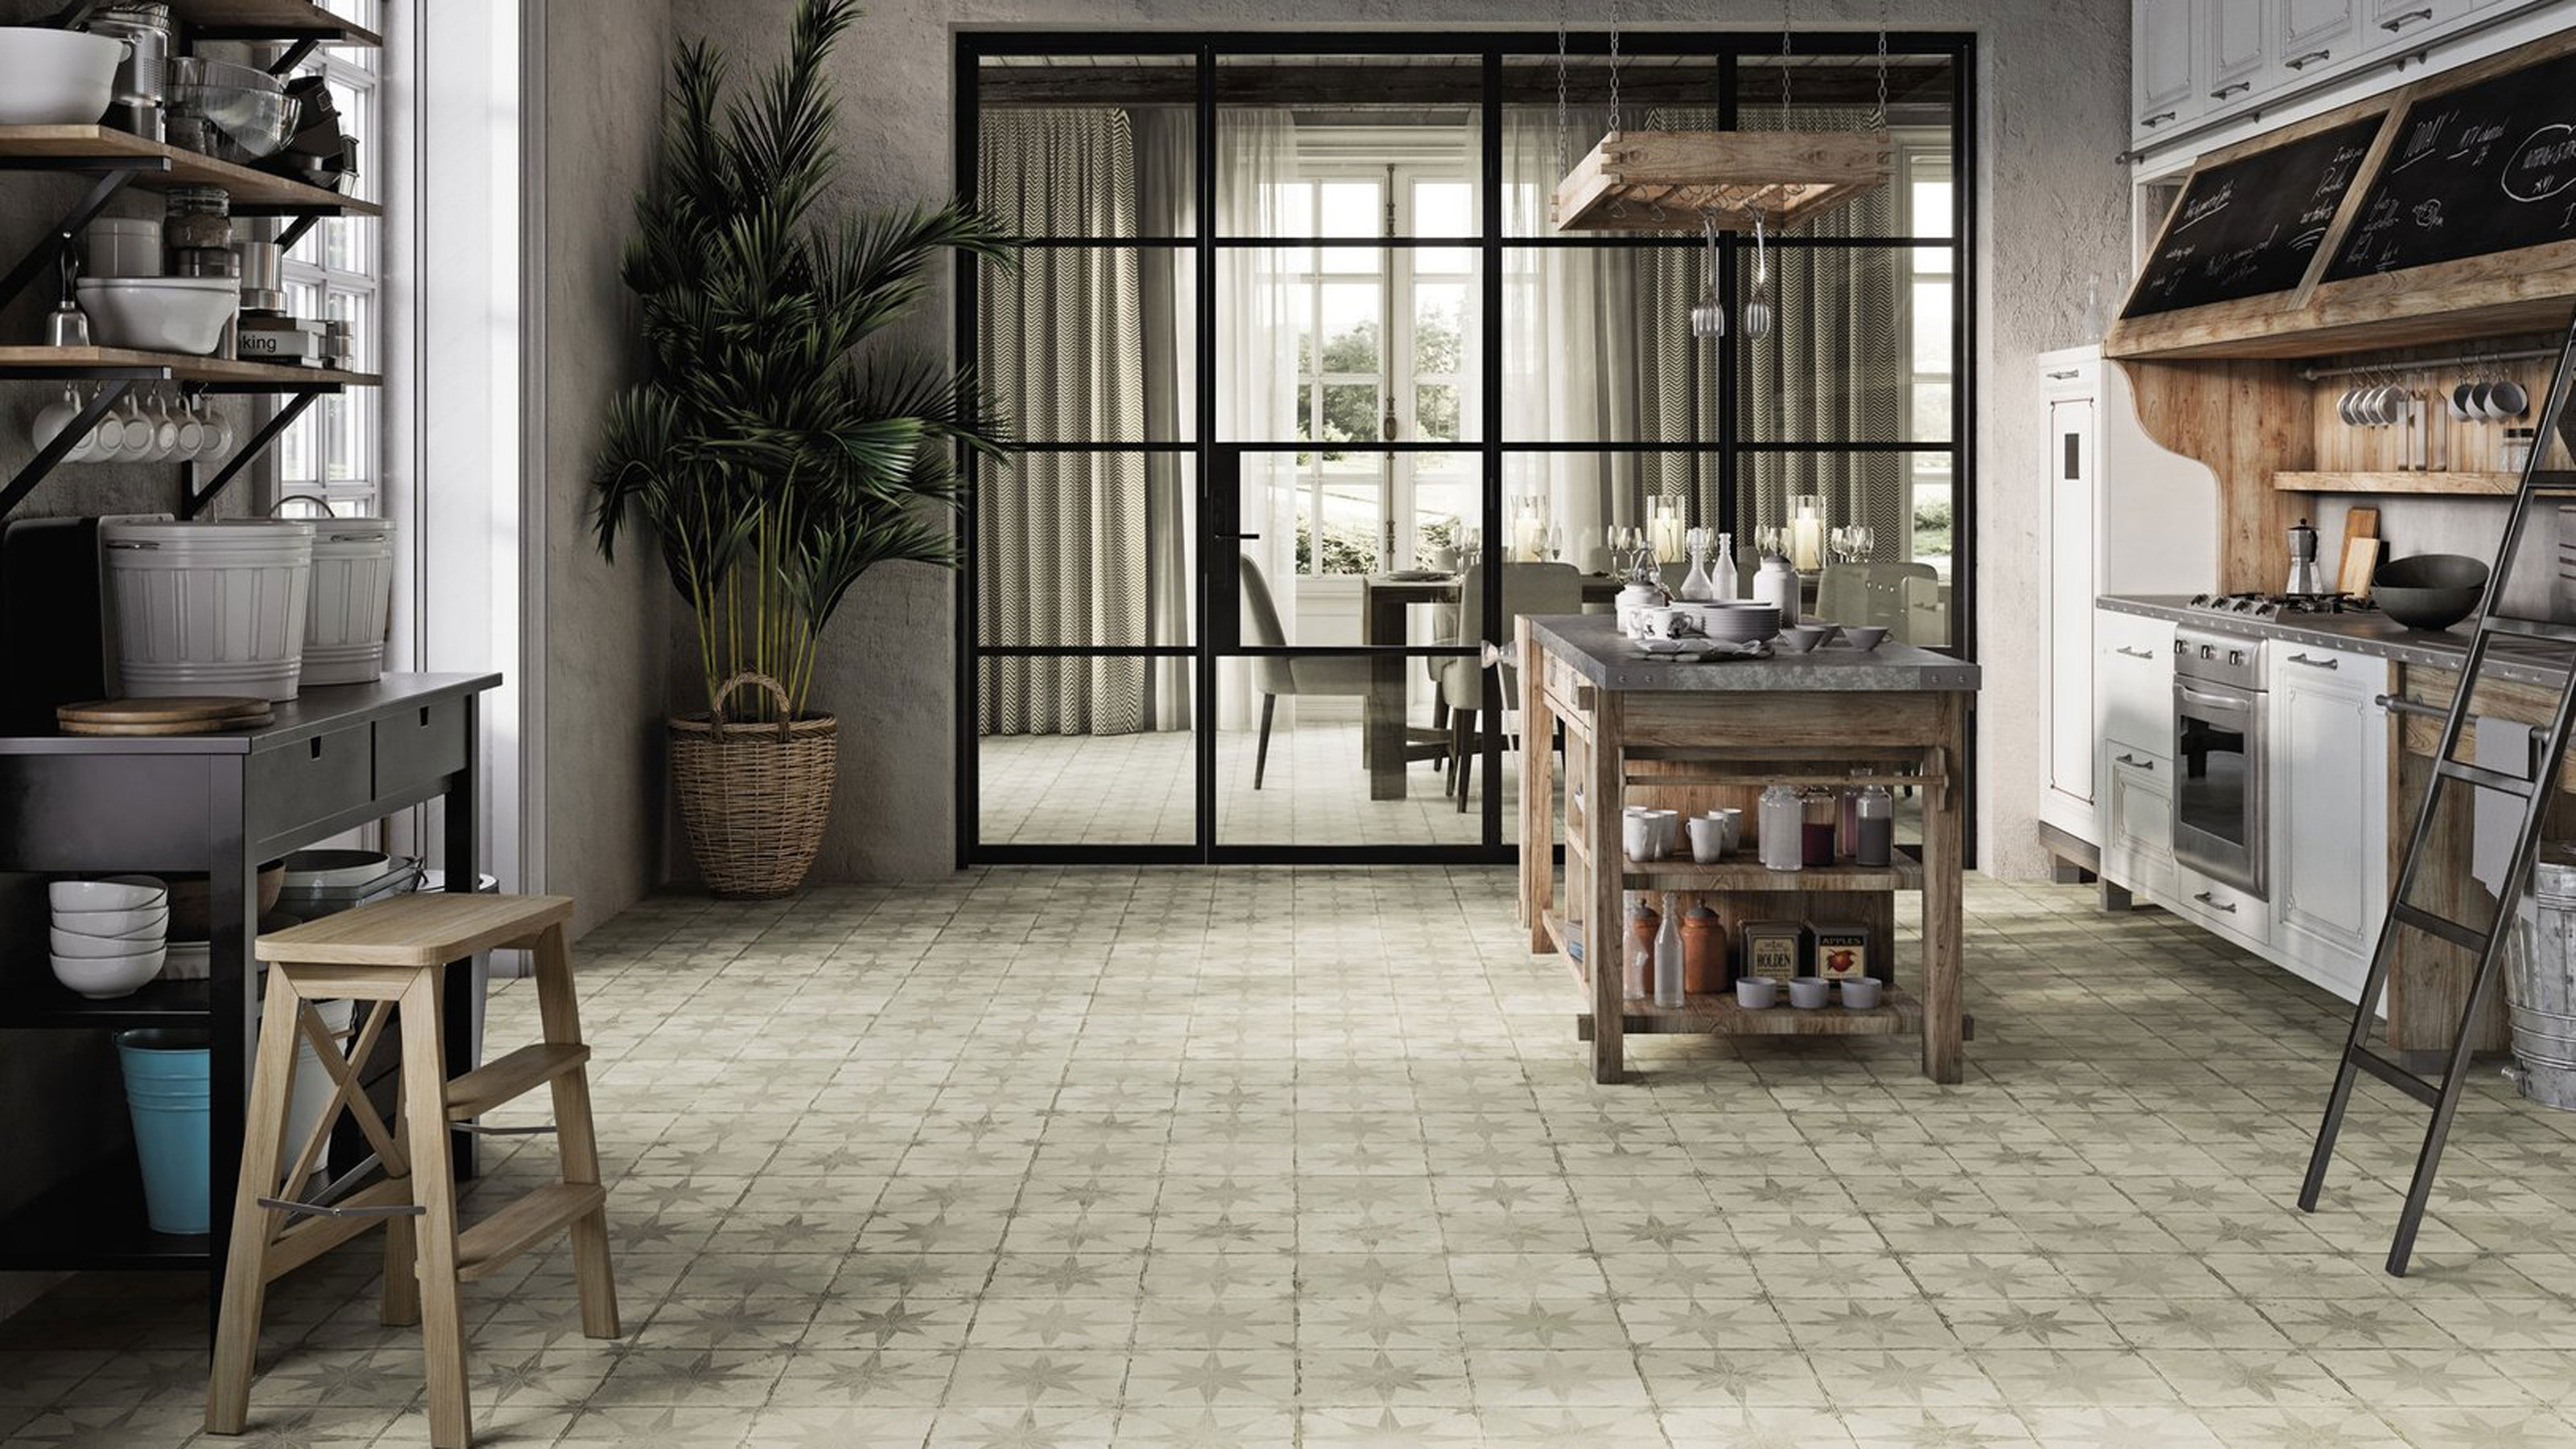 Kitchen floor tile ideas – 20 stylish tile designs for kitchen ...